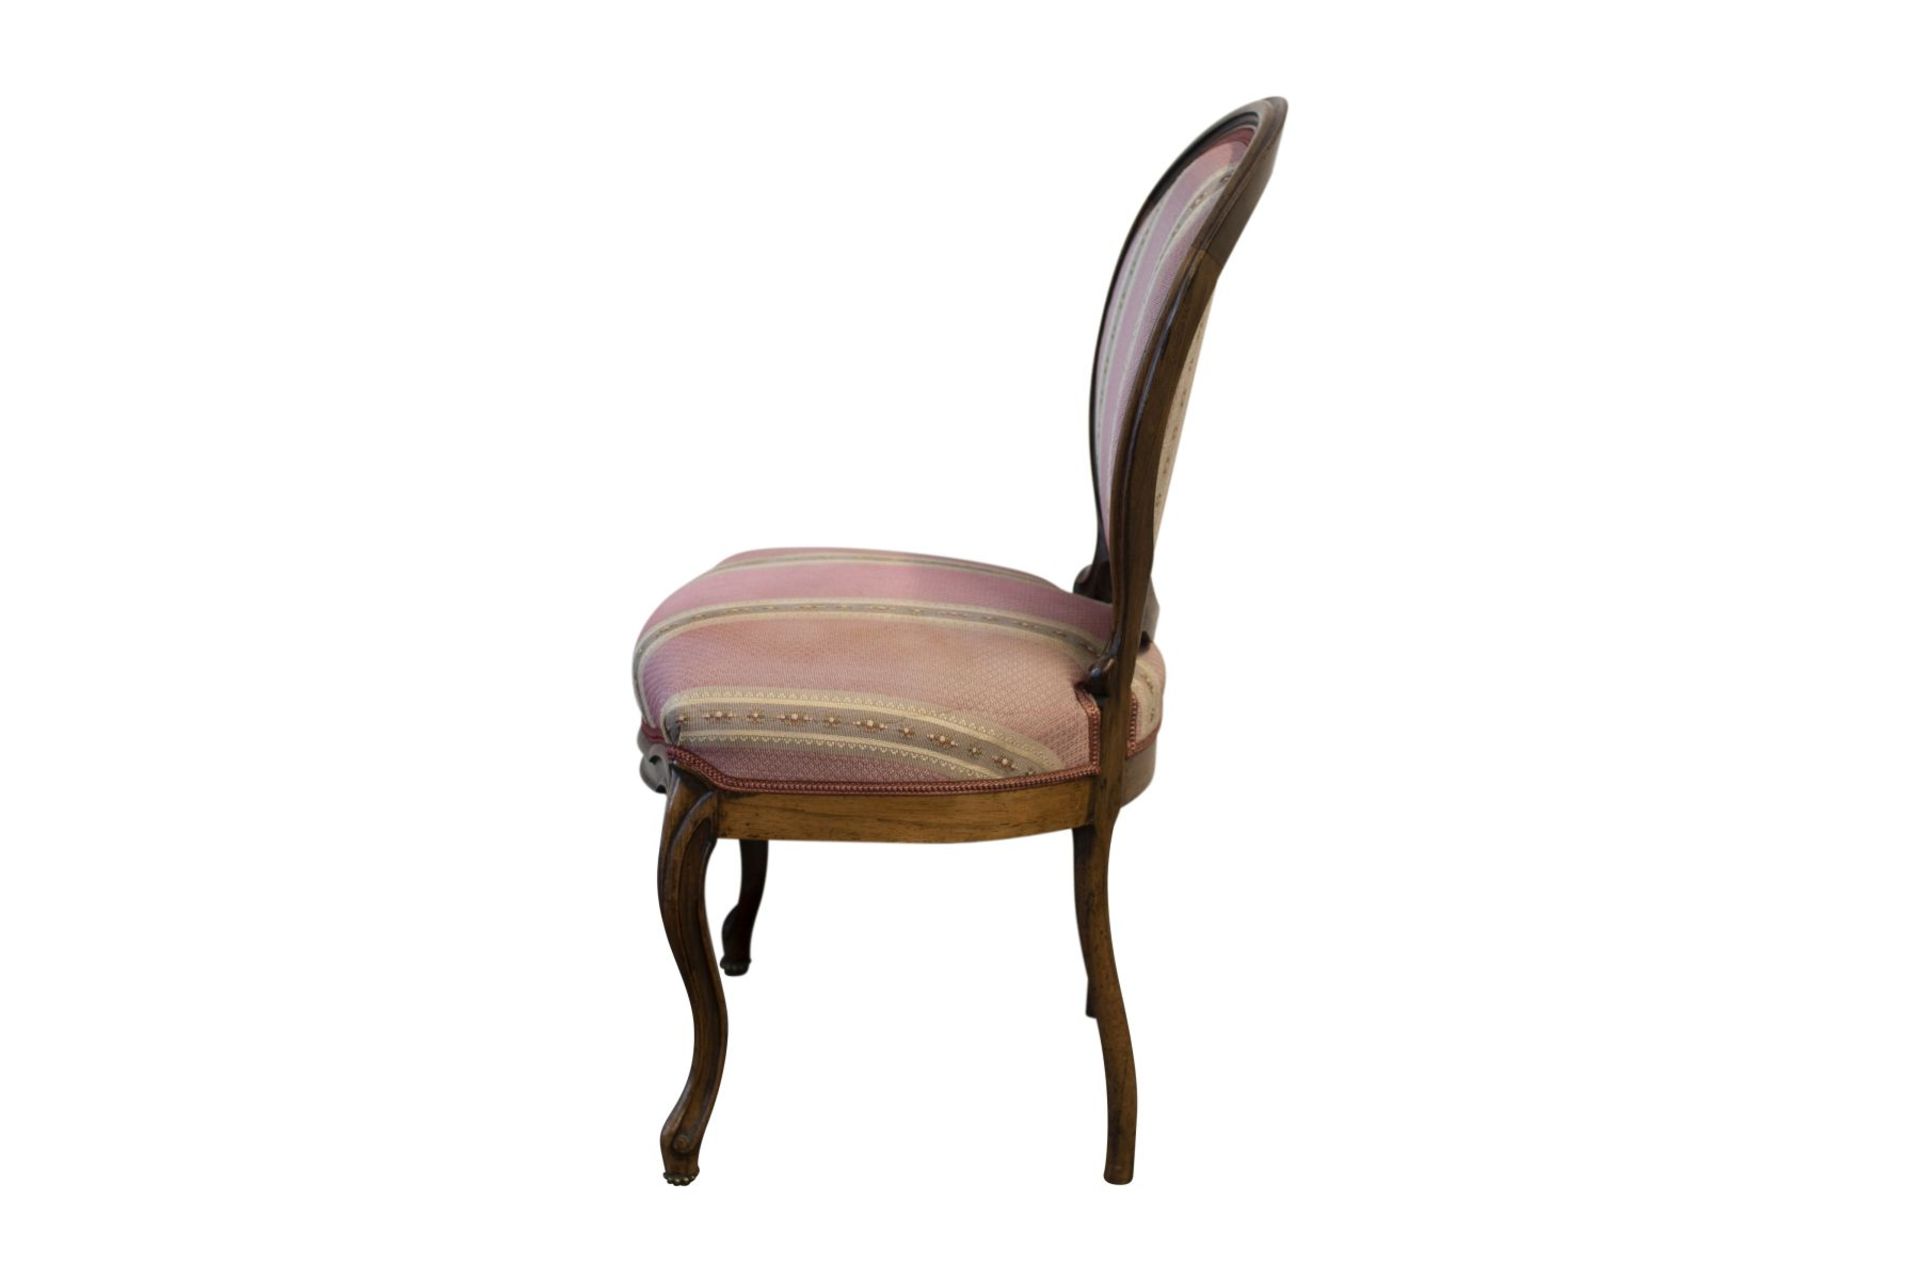 Biedermeier Salon Chairs | Salonstuehle Biedermeier - Image 4 of 8